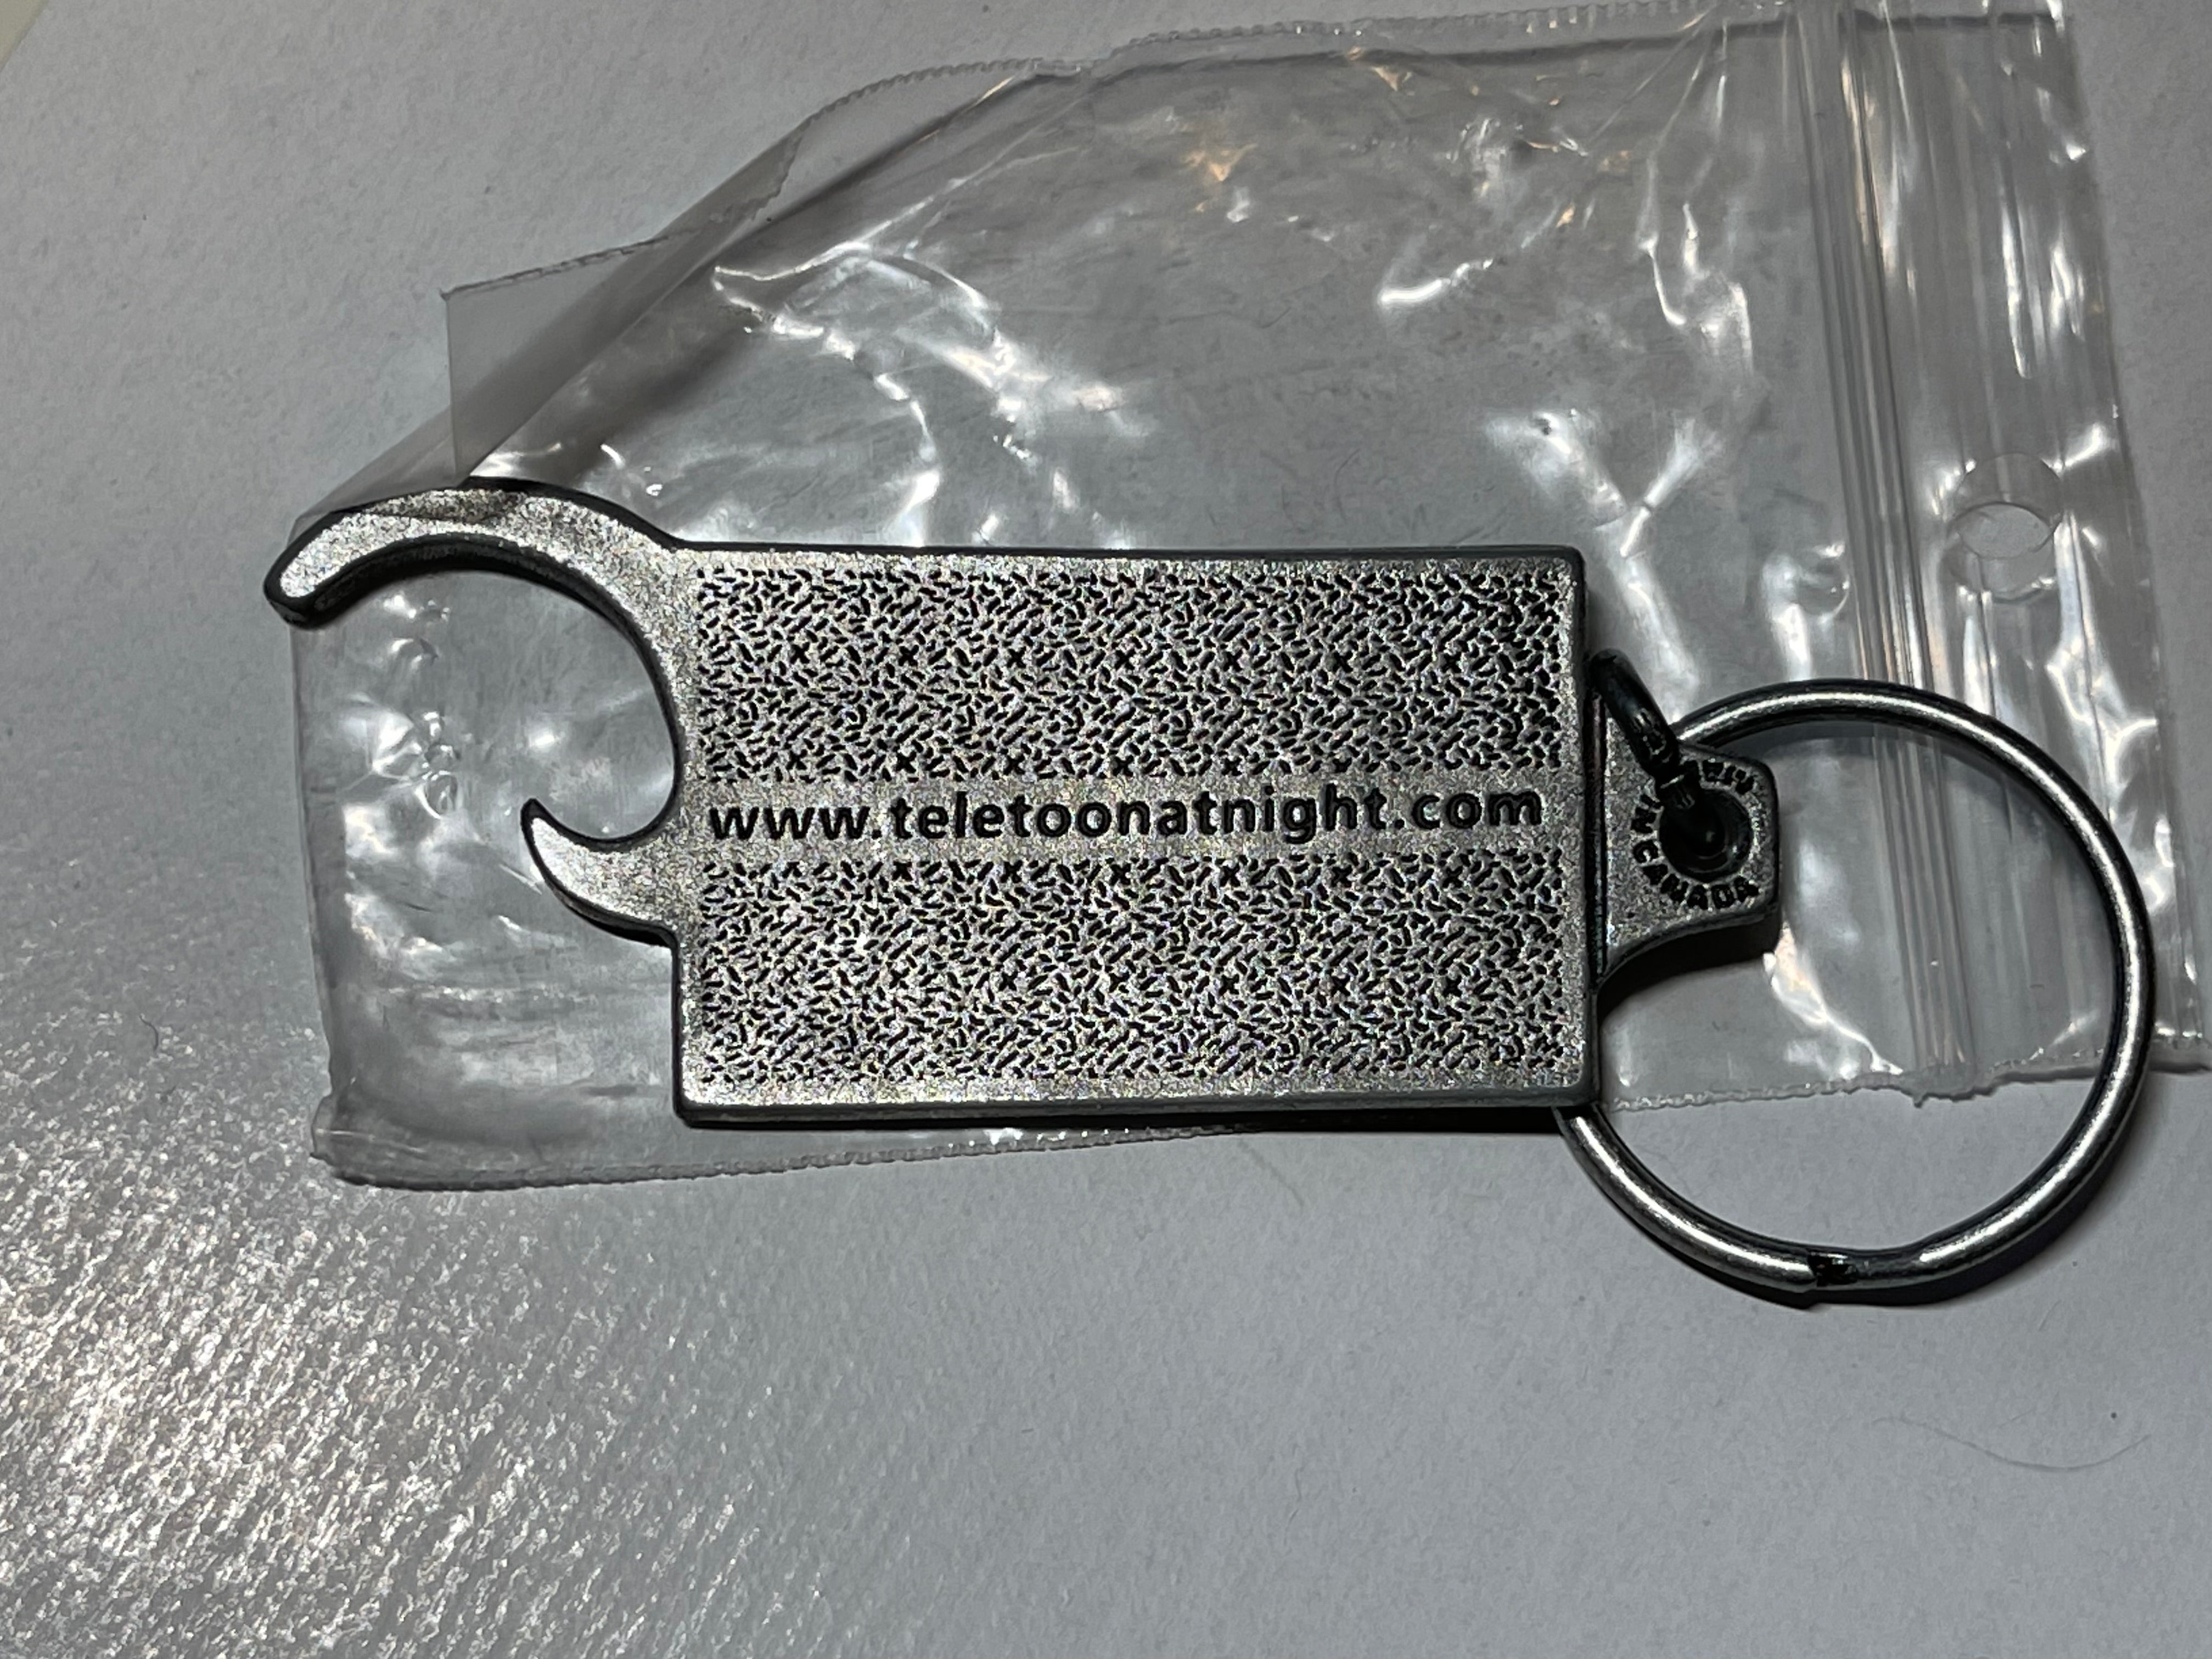 Teletoon at Night Cartoon Network limited metal keychain